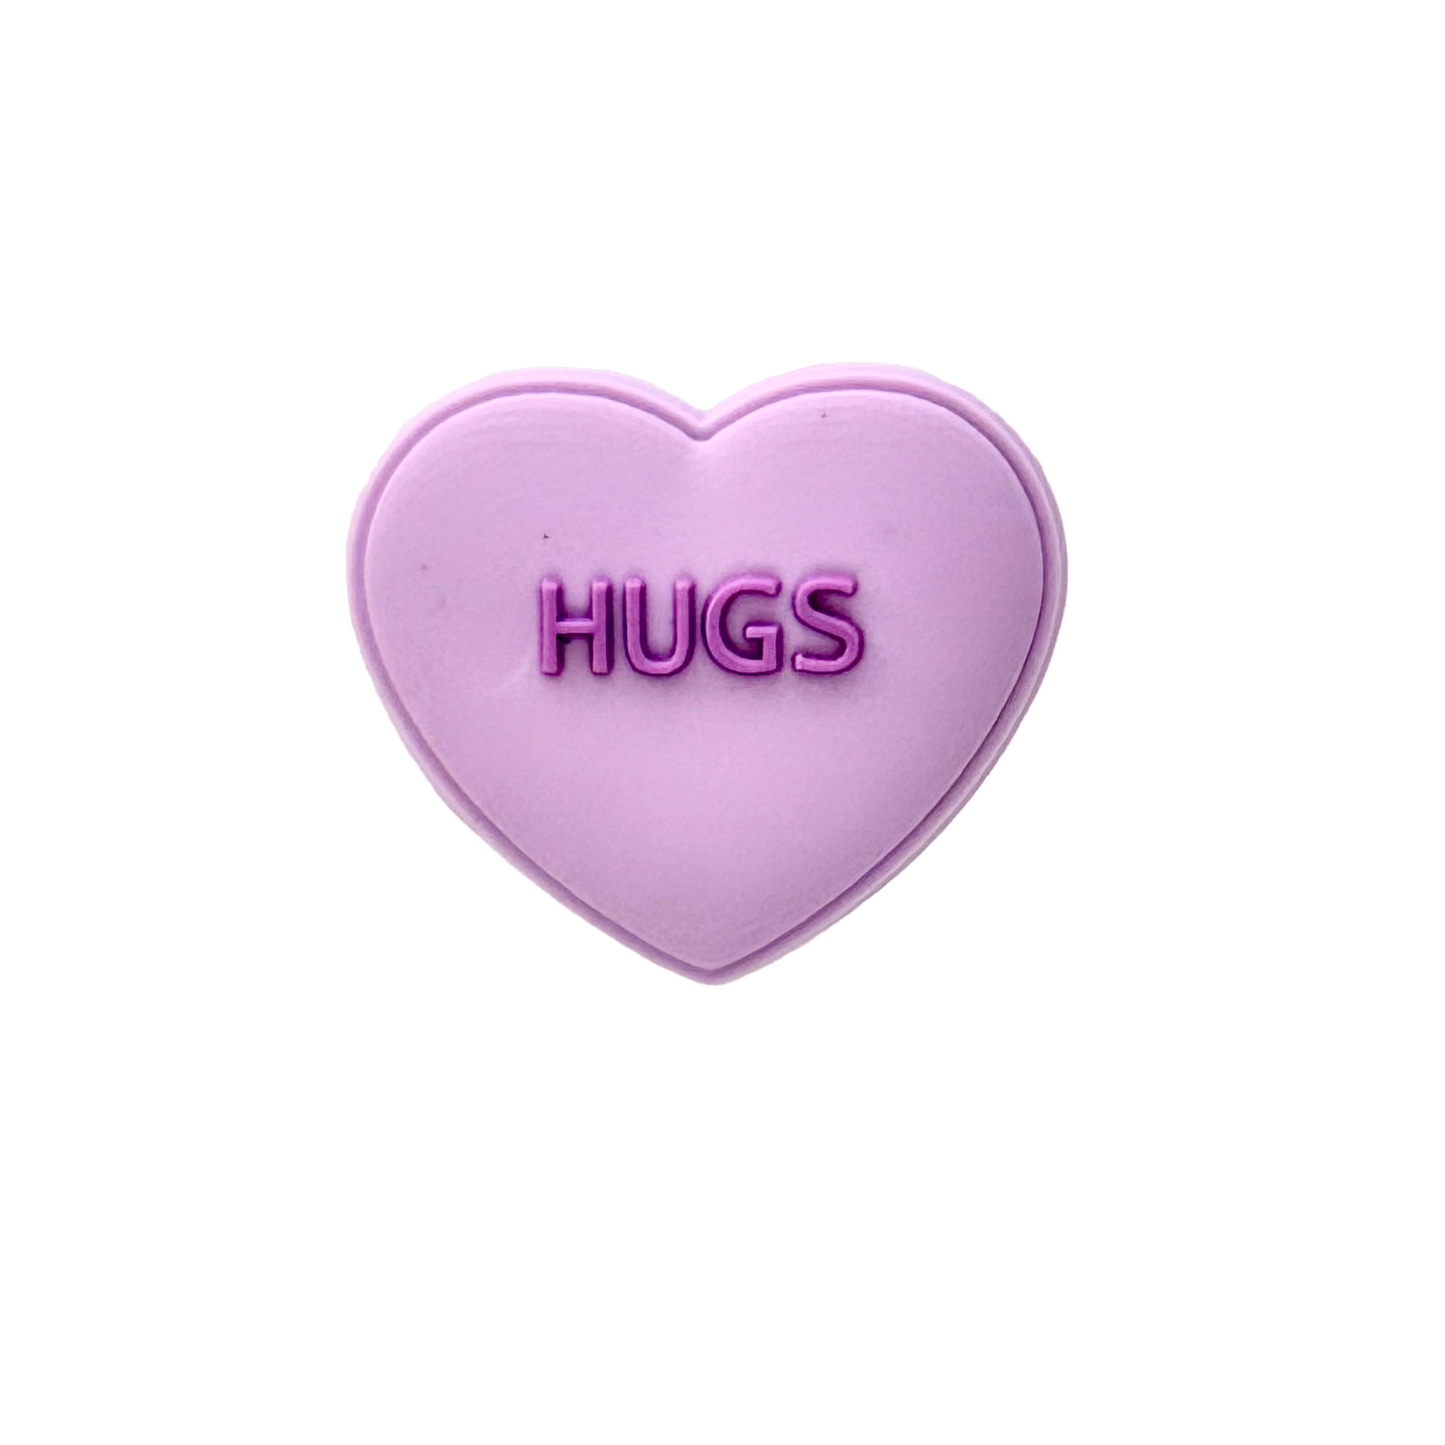 "Hugs" Heart - Pawpins Charm